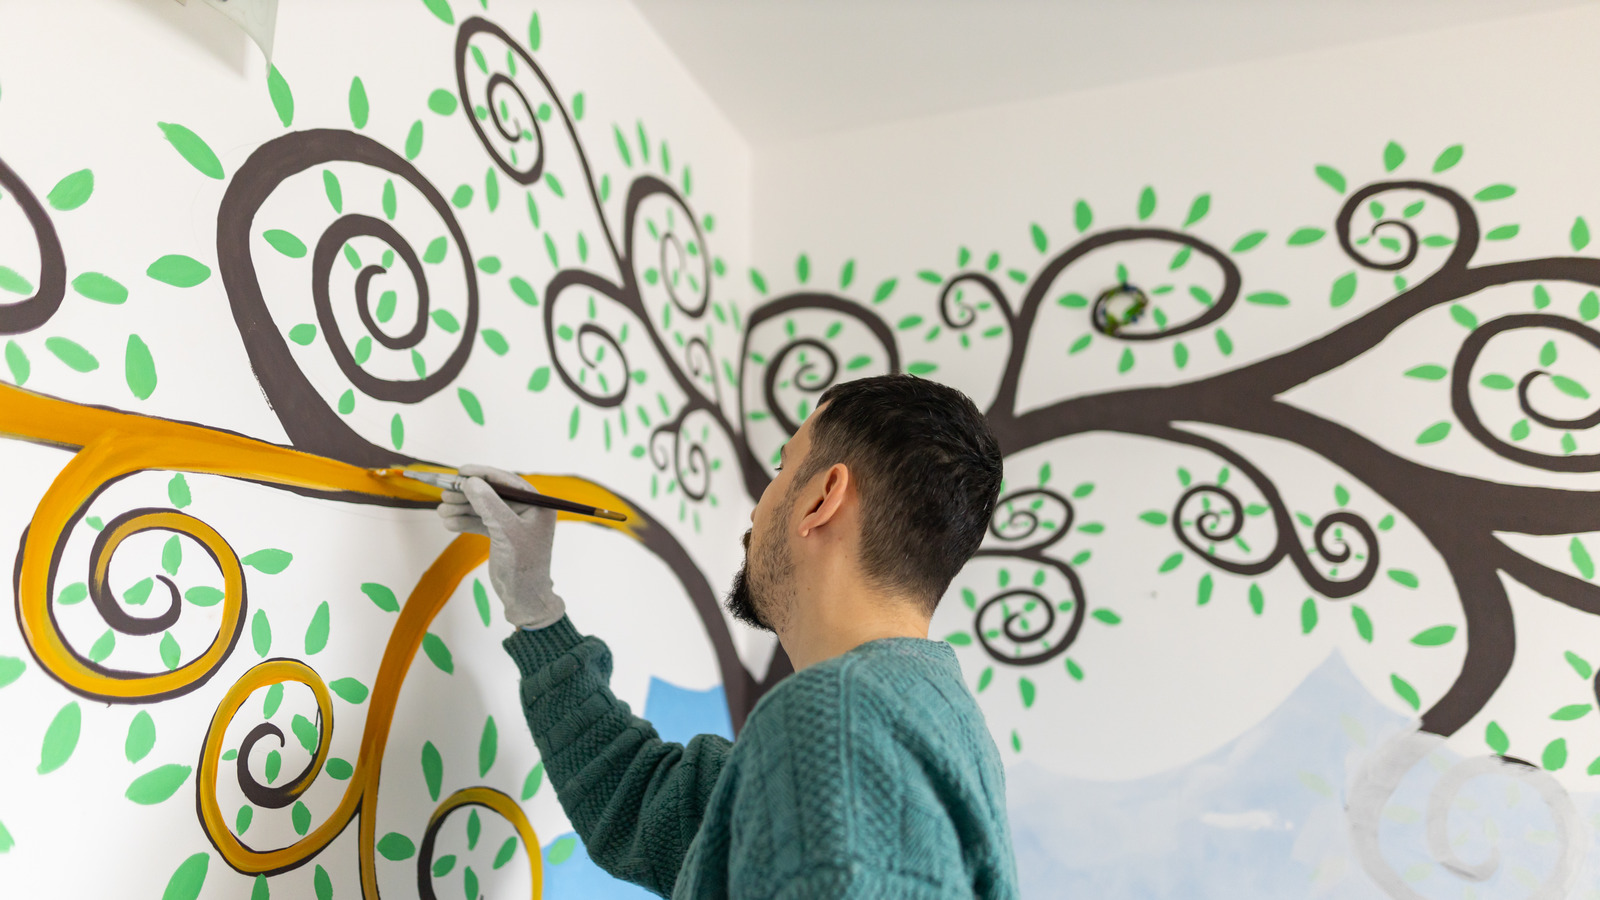 Trending gorgeous wall decor ideas | Creative wall painting, Diy wall  painting, Wall art diy paint